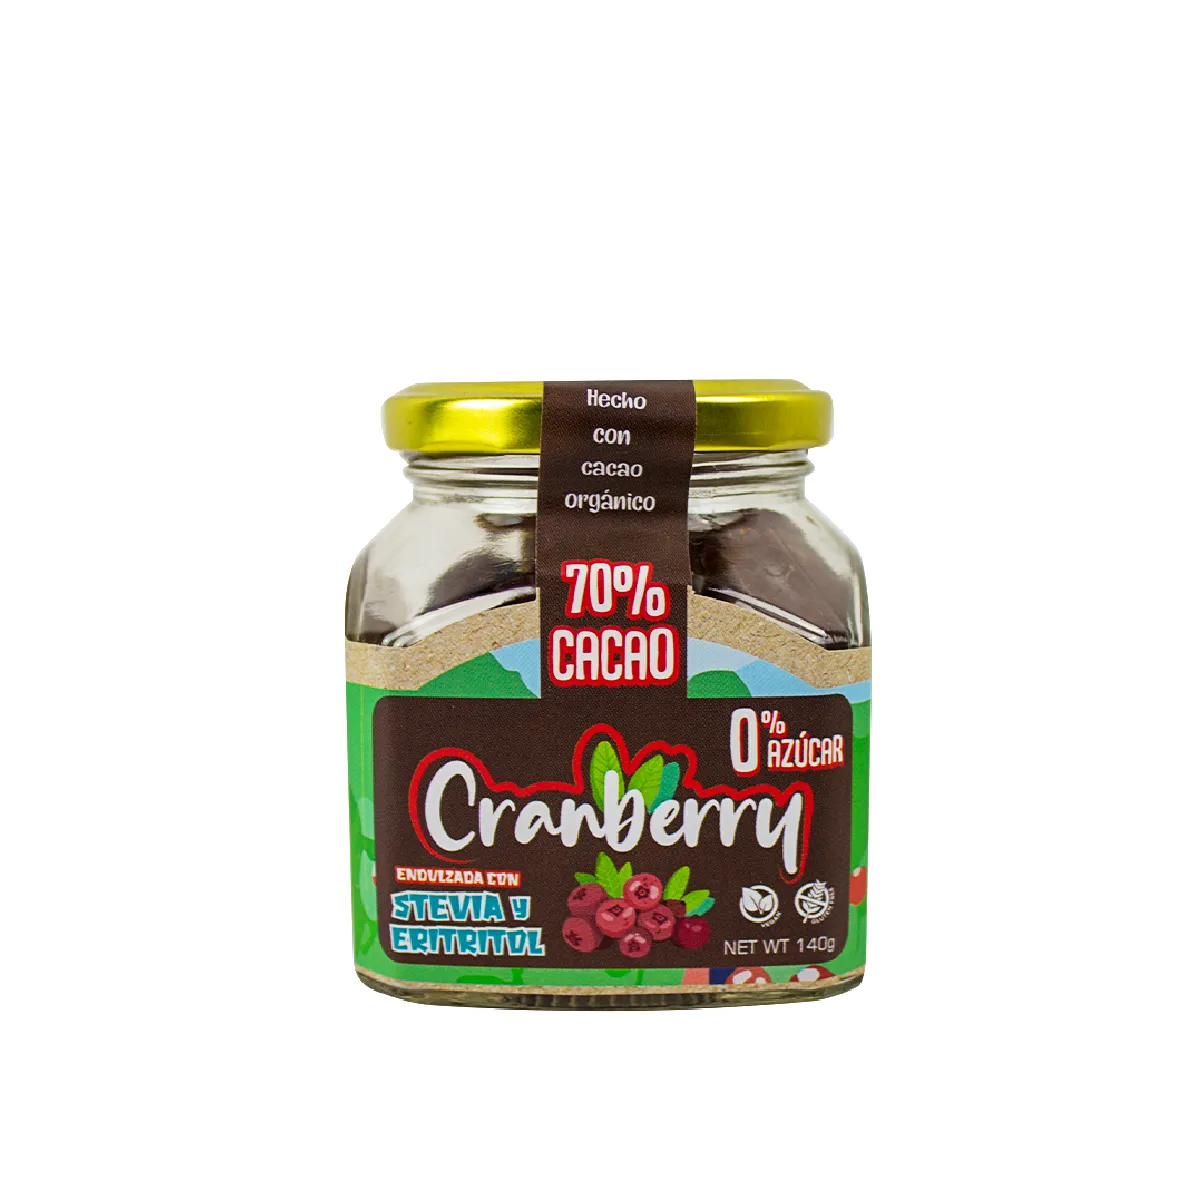 choco cramberry 70% cacao